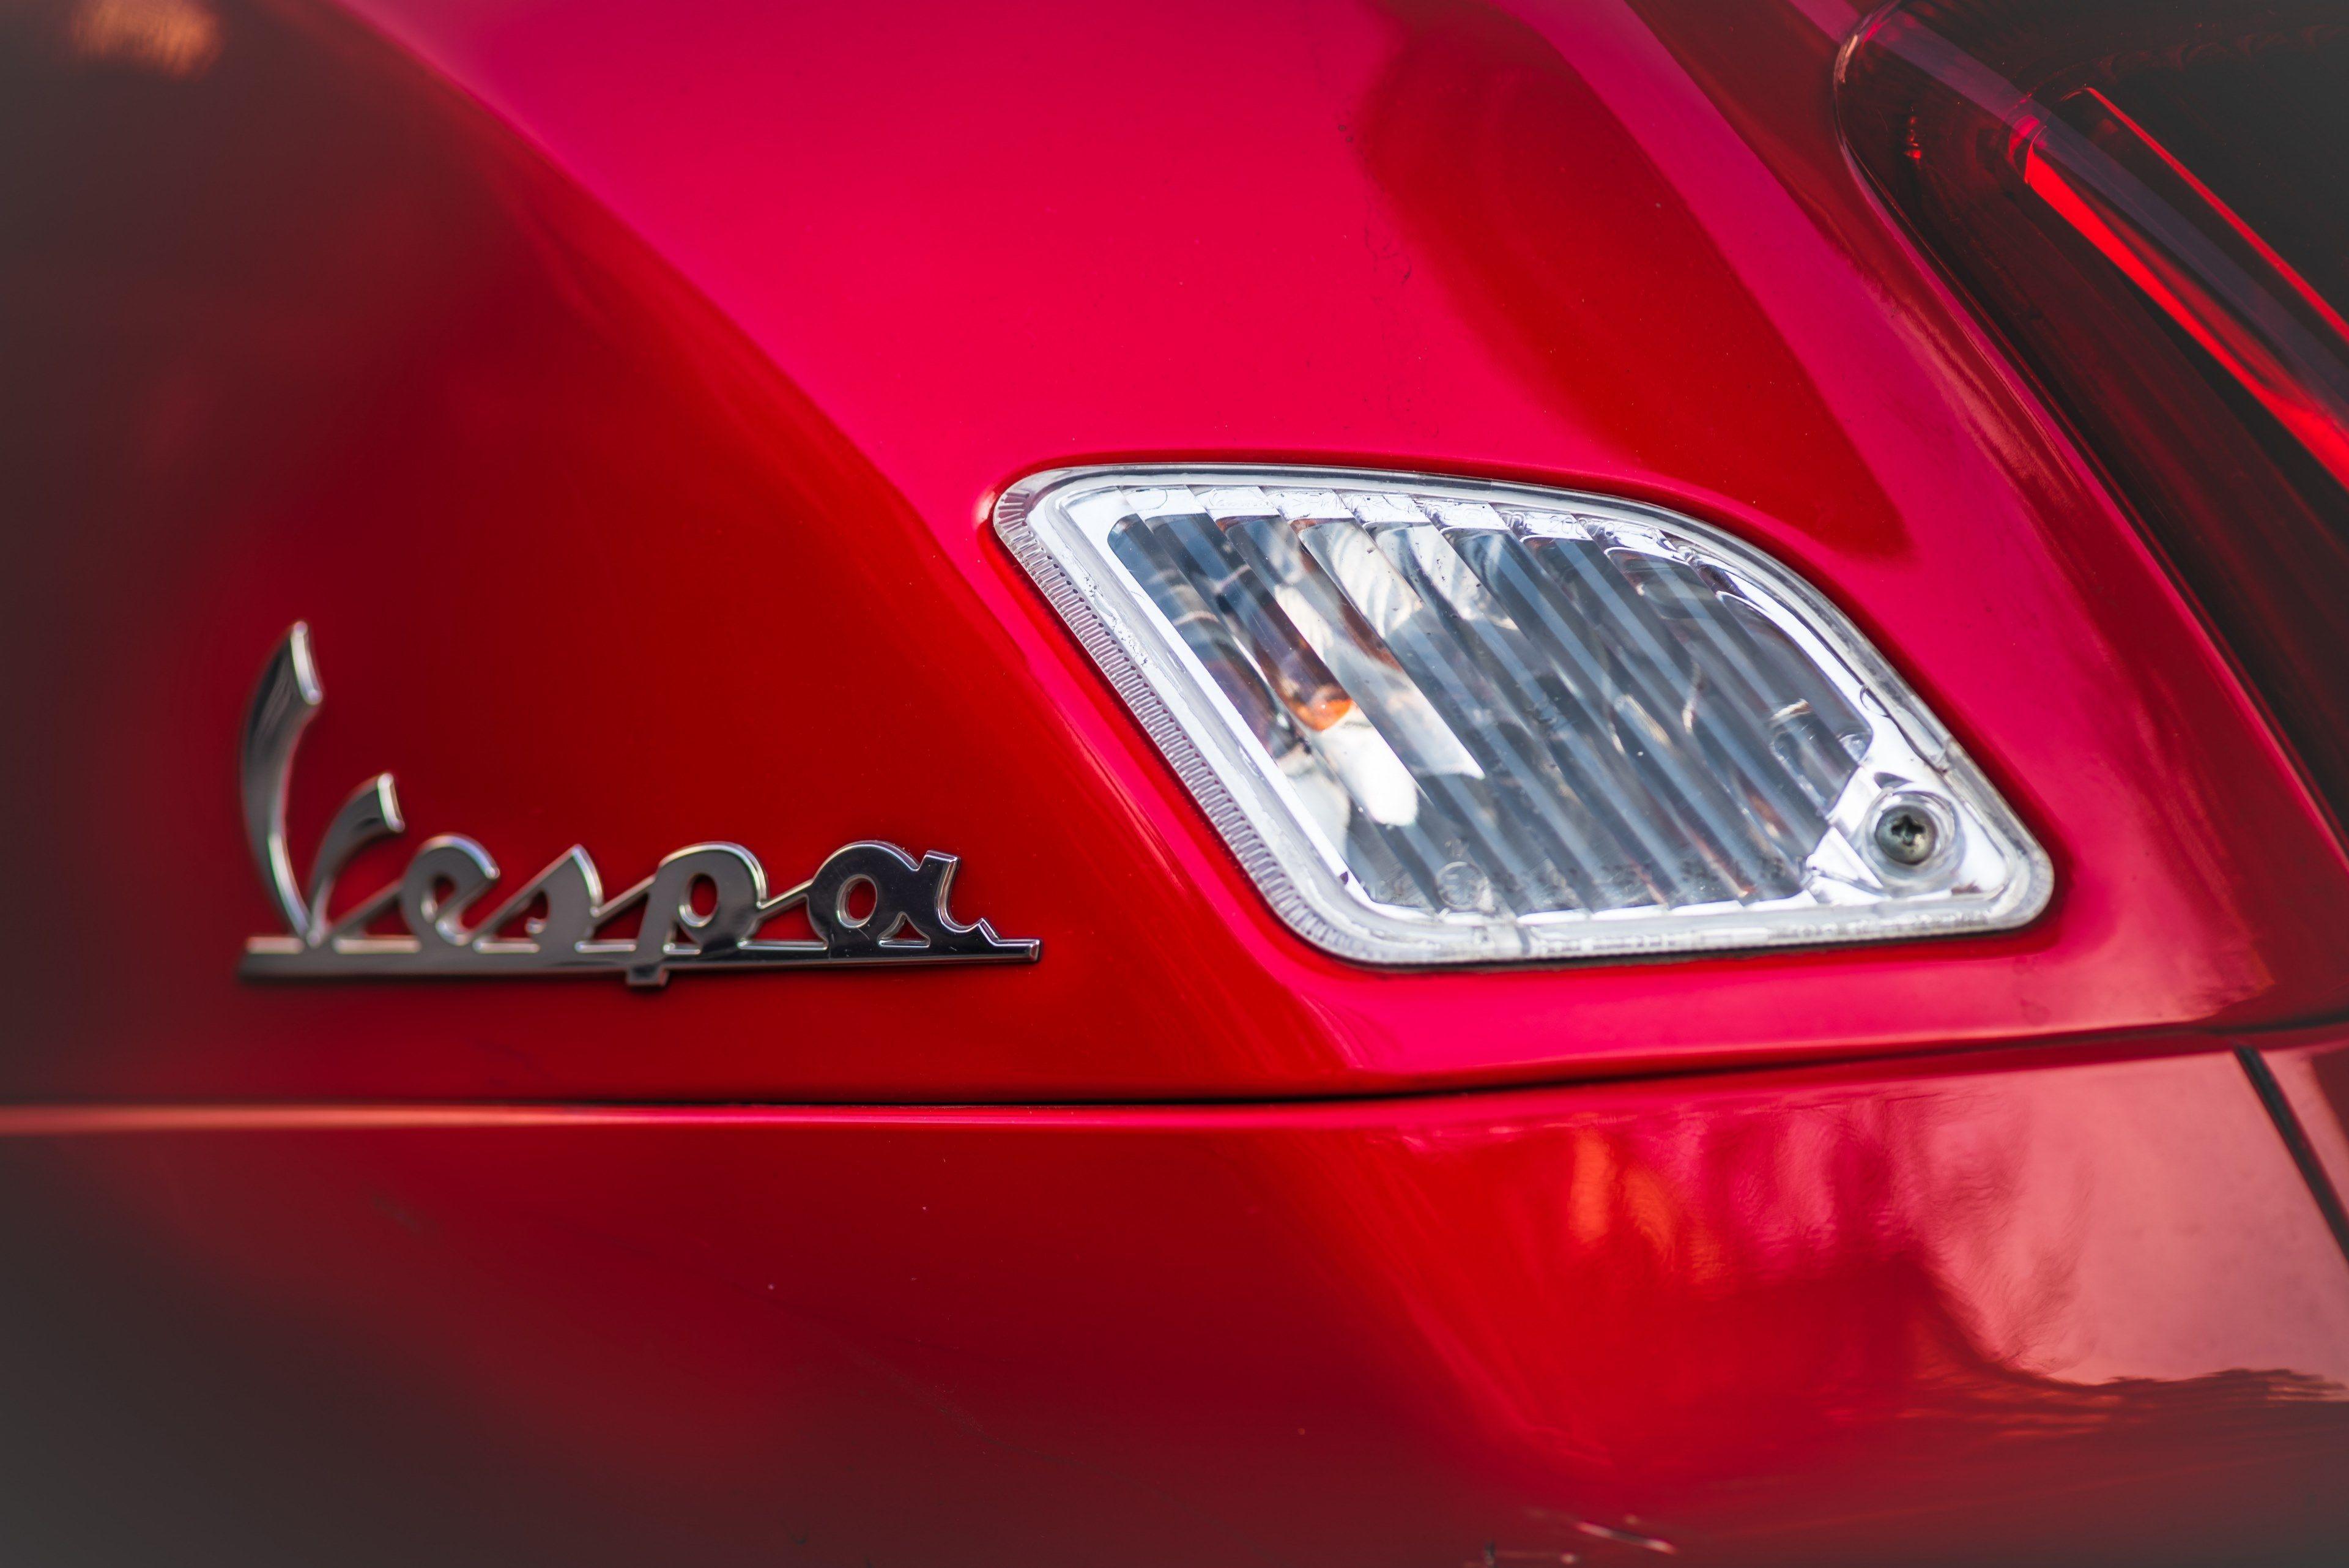 macro of a vespa logo on a red automobilevespa logo on a motor